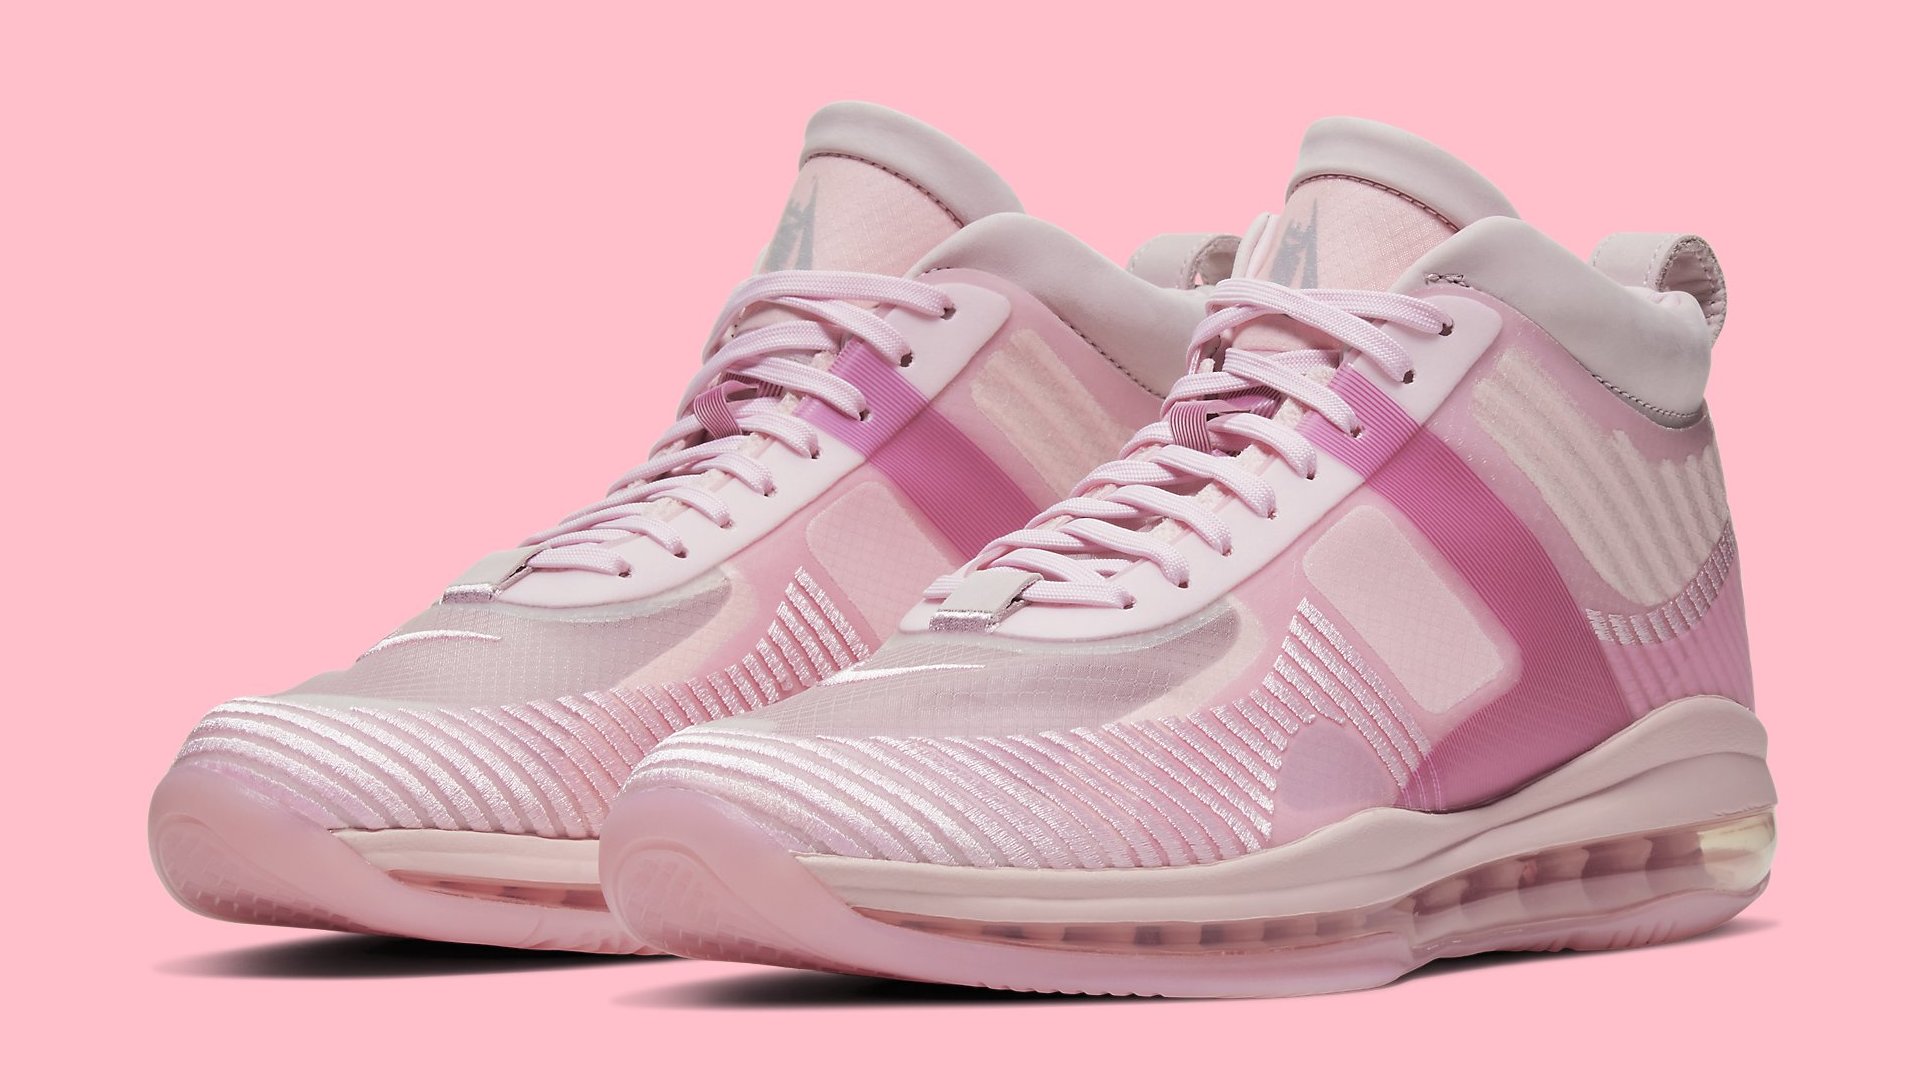 lebron pink sneakers